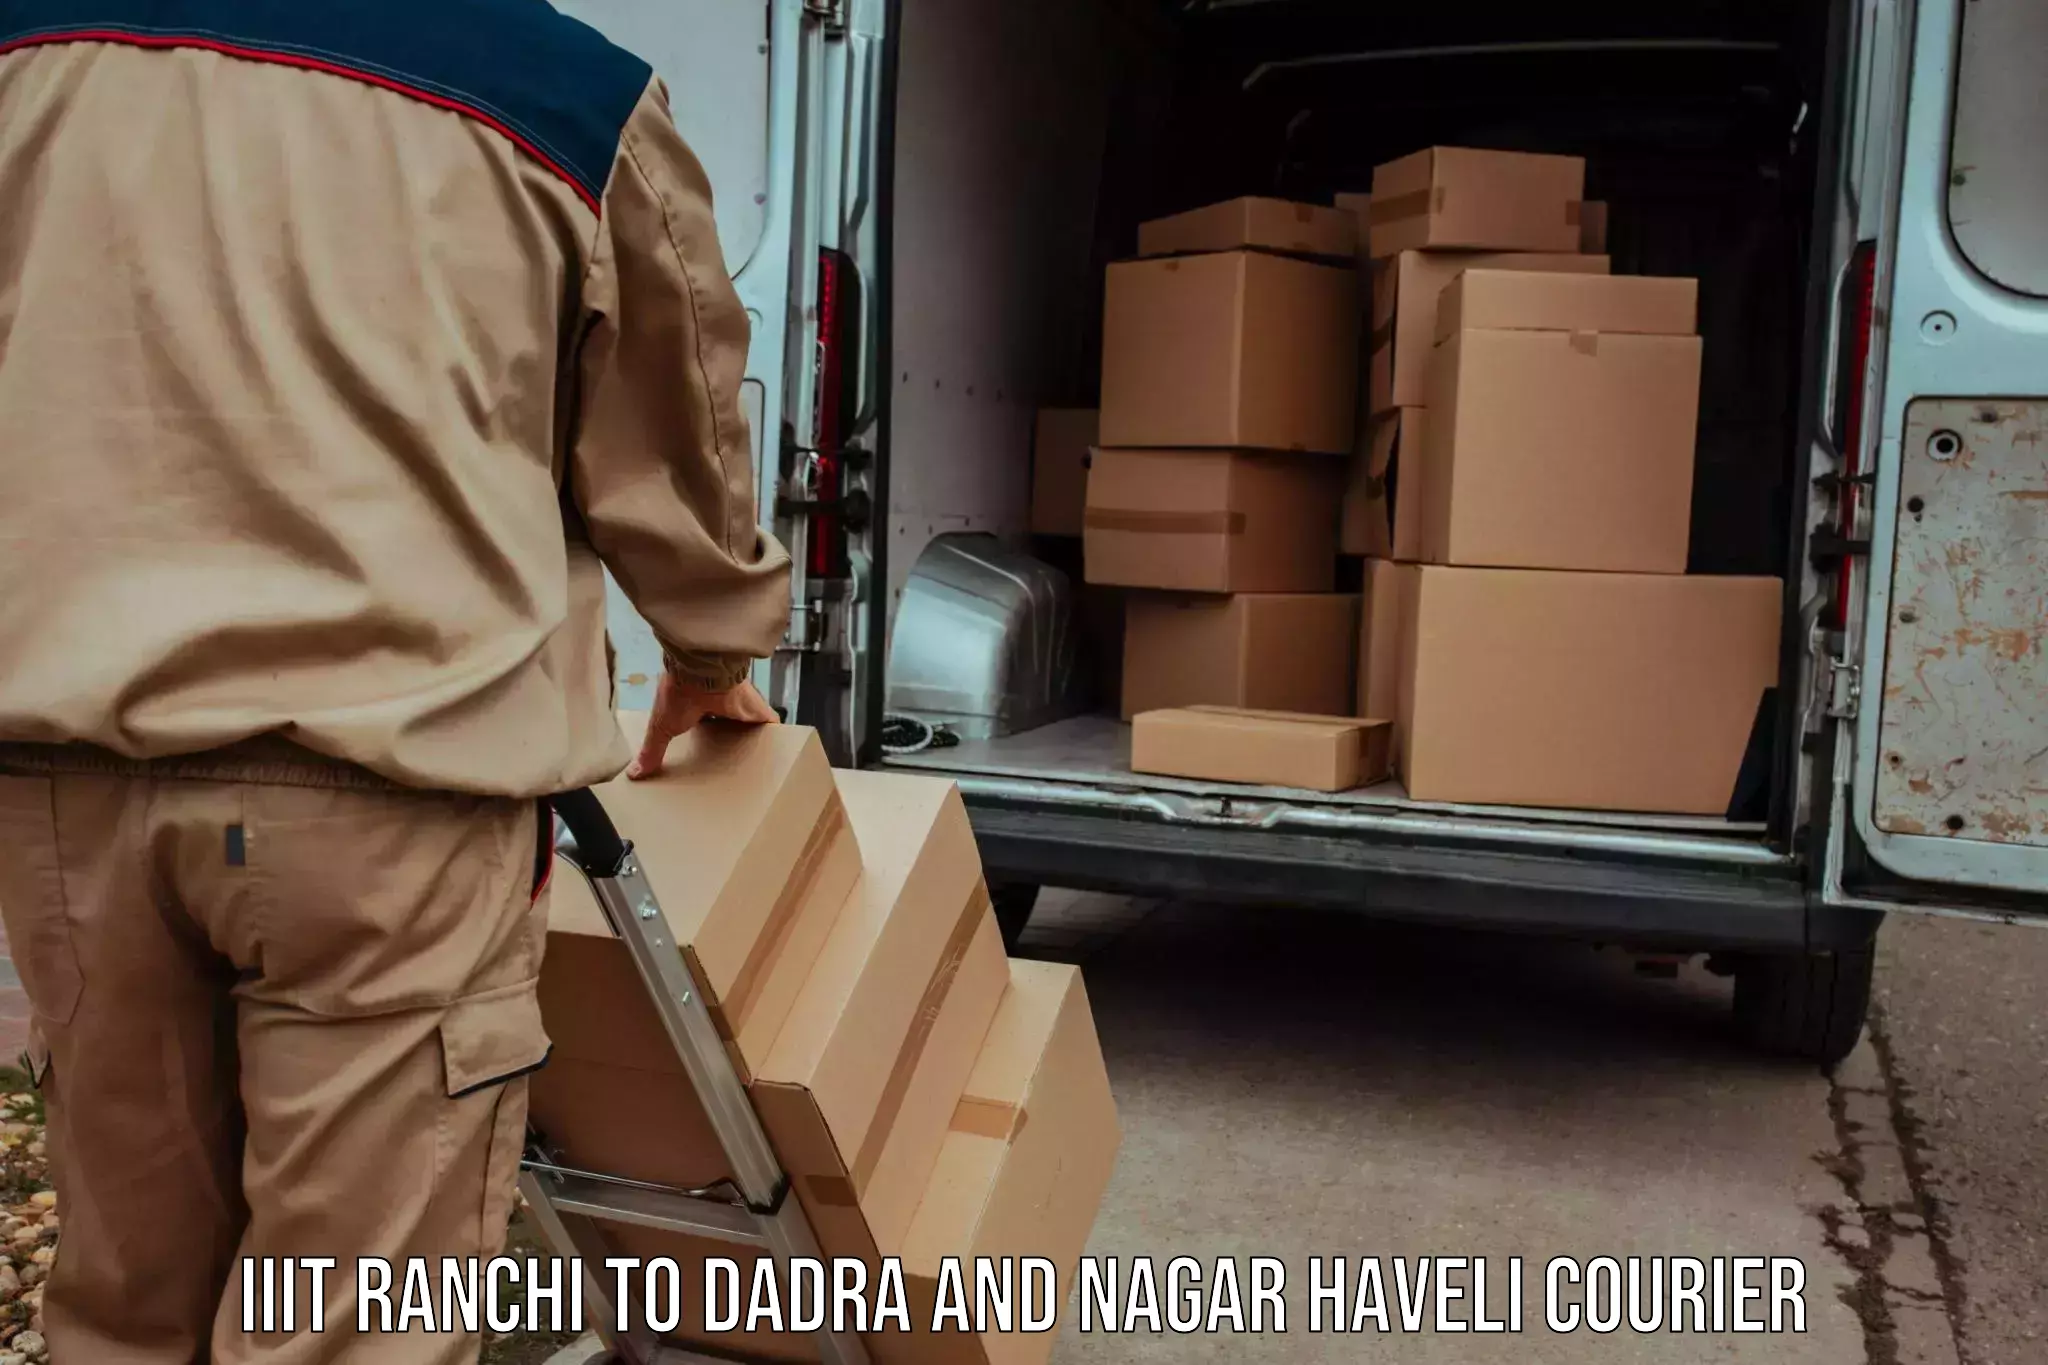 Courier service efficiency IIIT Ranchi to Dadra and Nagar Haveli